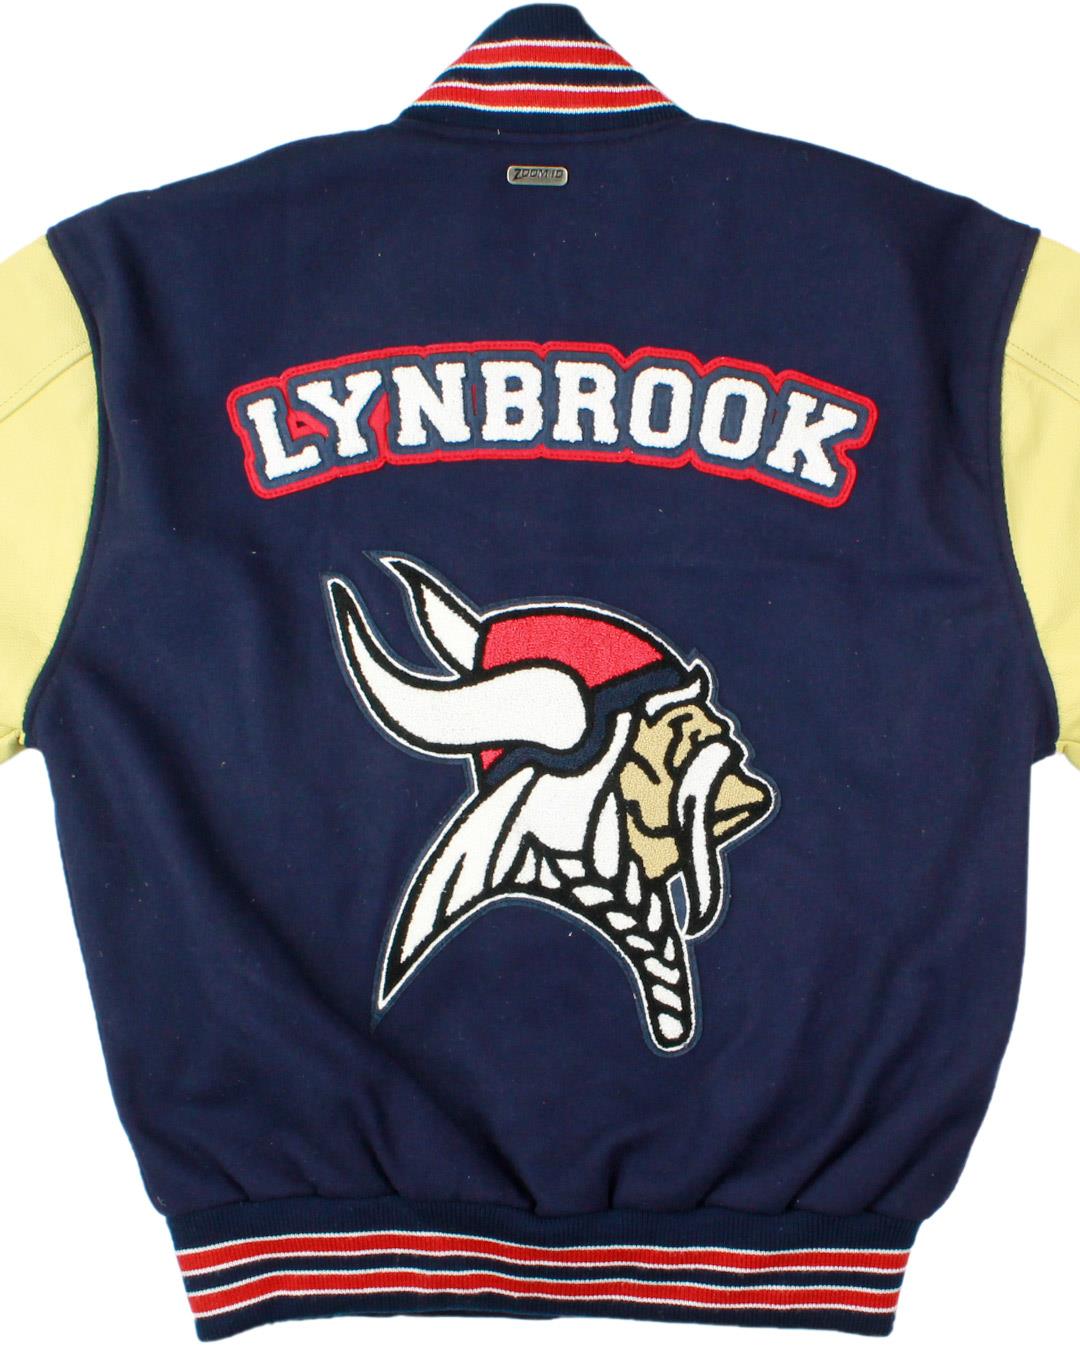 Lynbrook High School Letter Jacket, San Jose, CA - Back